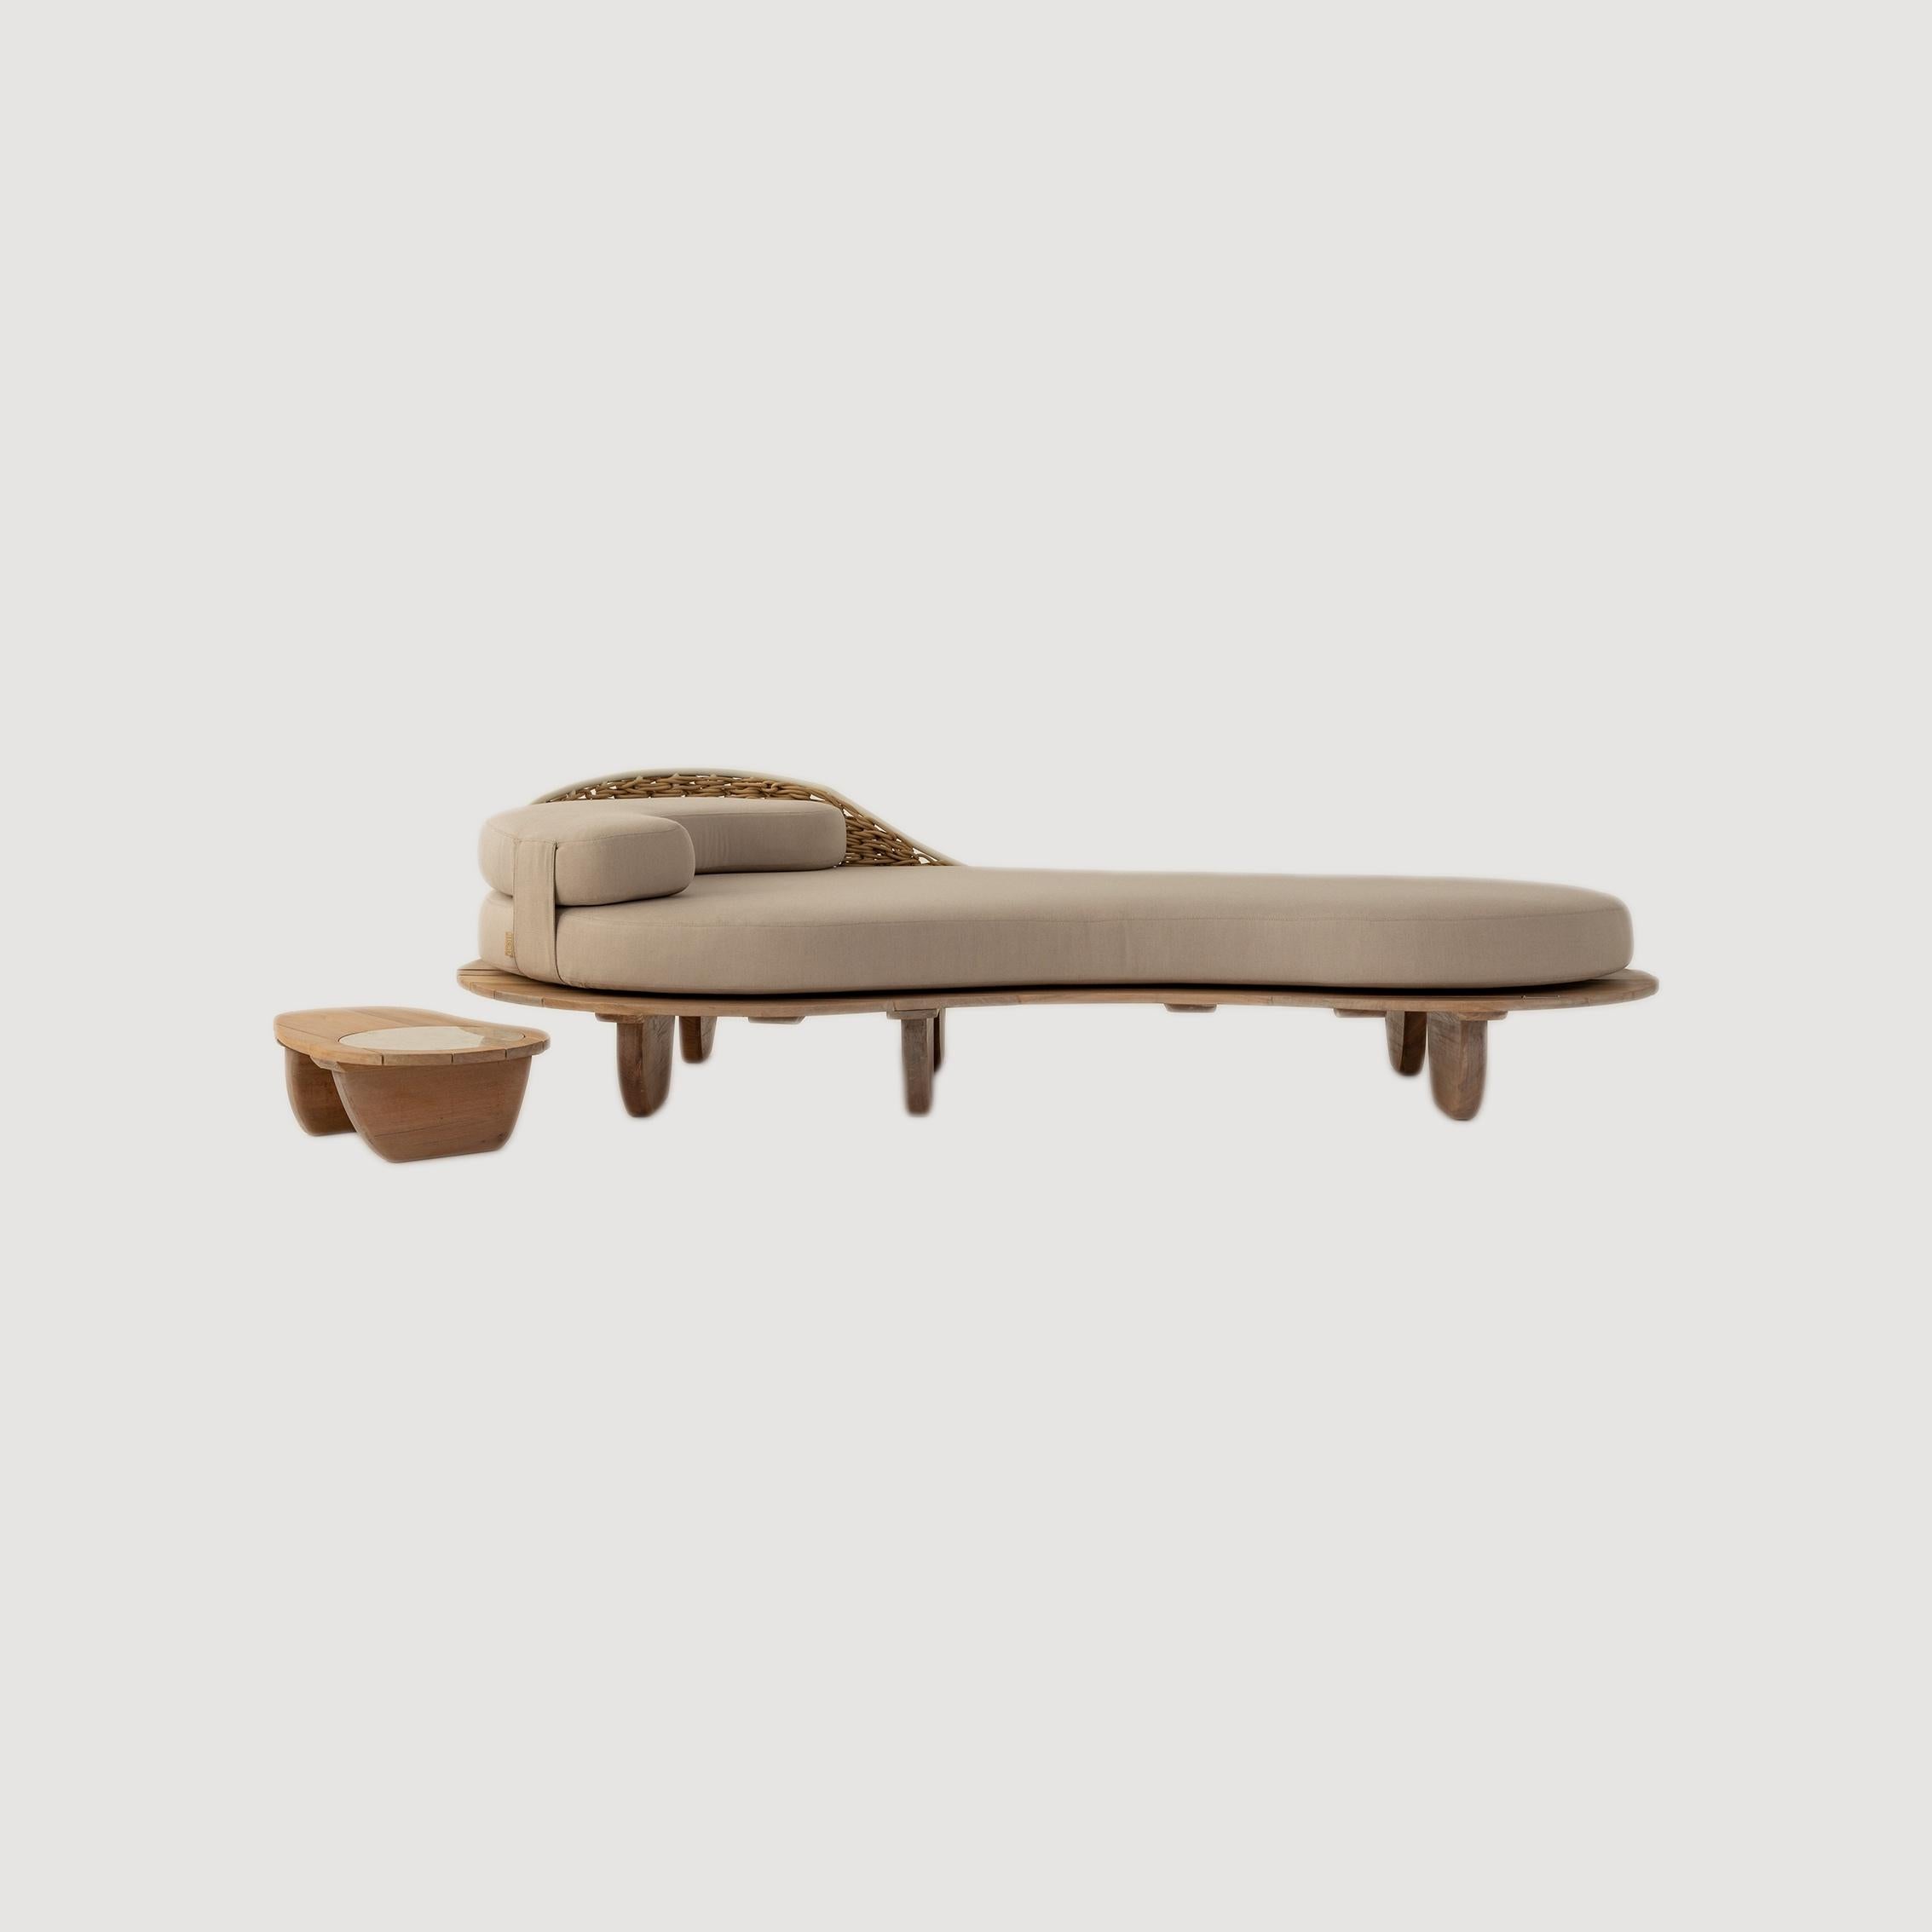 The Sayari Indoor / Outdoor Daybed Chaise and Table Kollektion von Studio Lloyd im Angebot 6